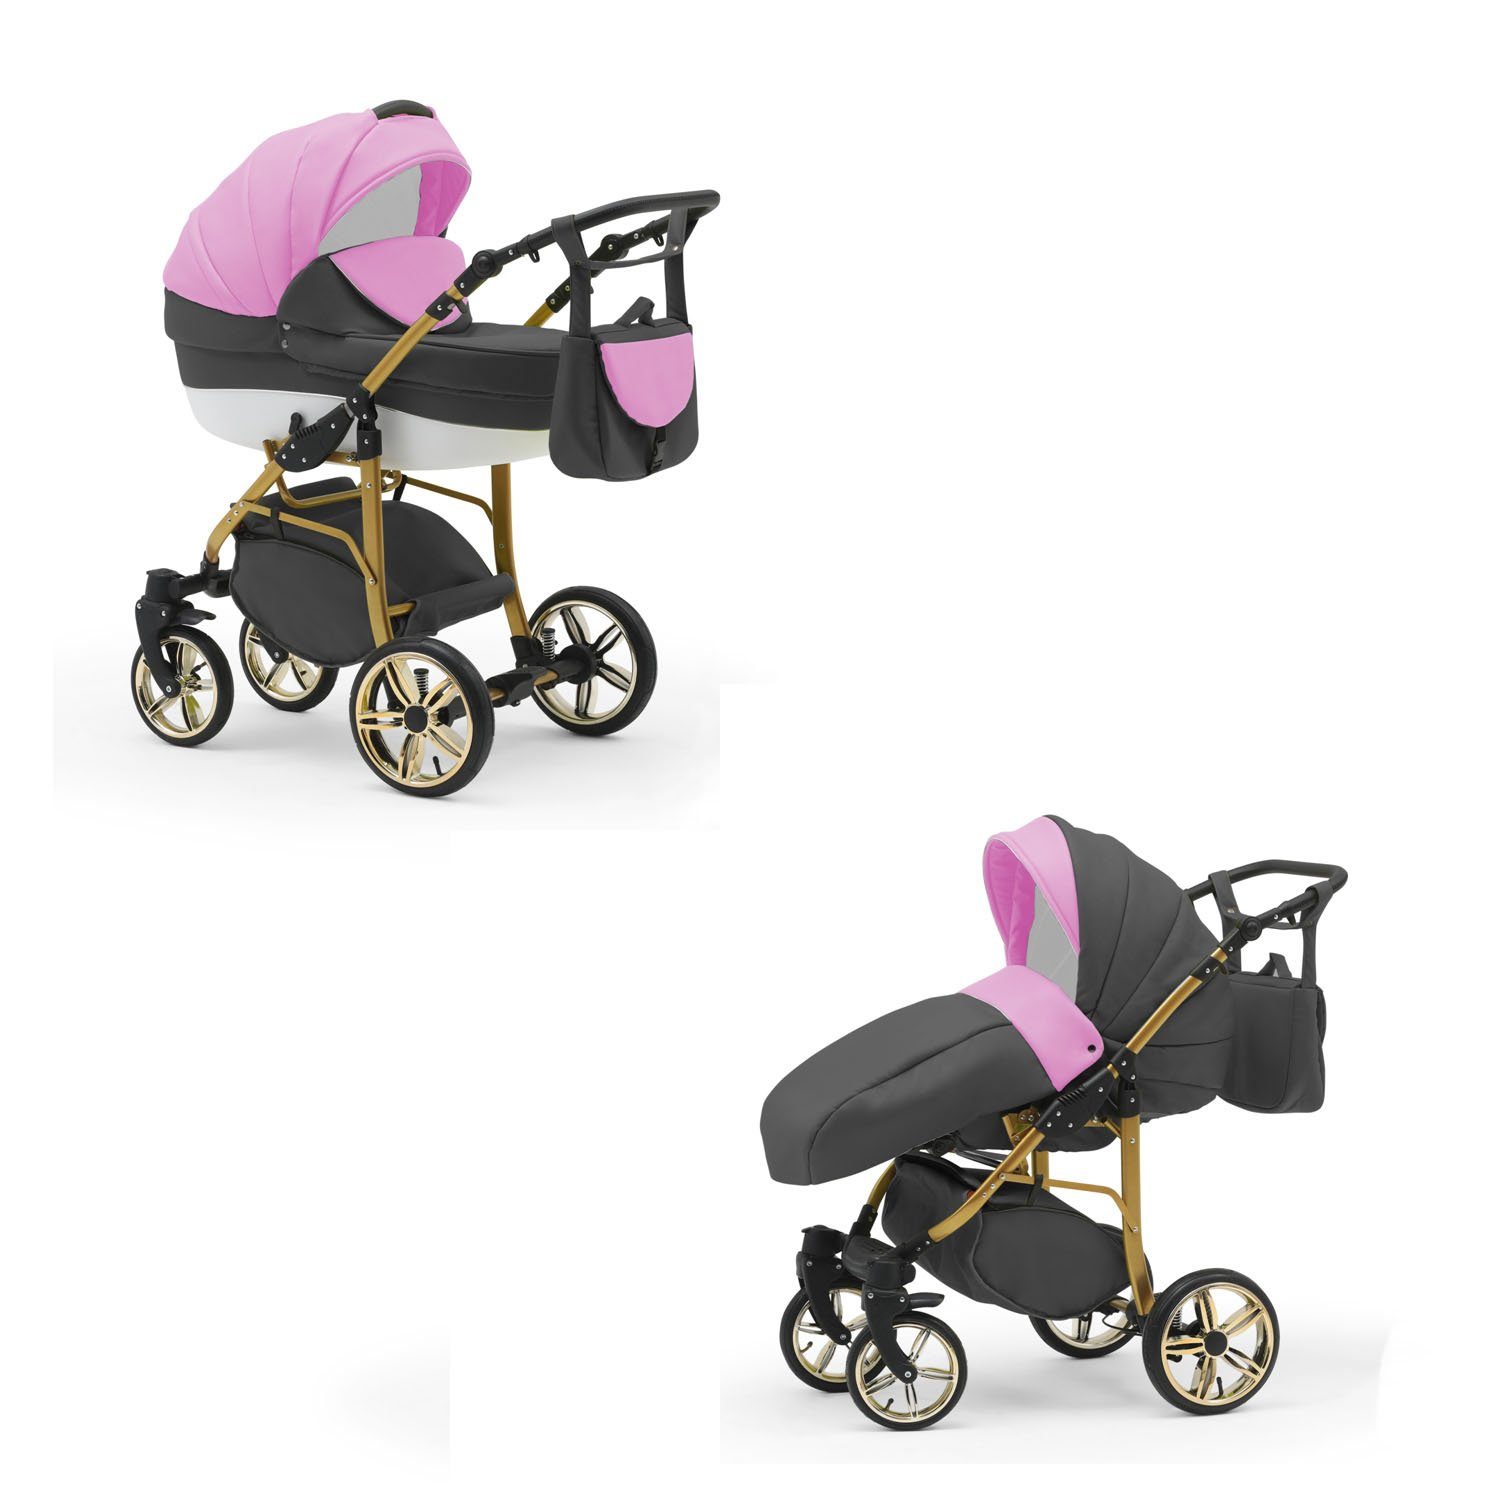 Farben Pink-Grau-Weiß Gold Teile in - Cosmo 2 46 Kombi-Kinderwagen 1 13 in babies-on-wheels - Kinderwagen-Set